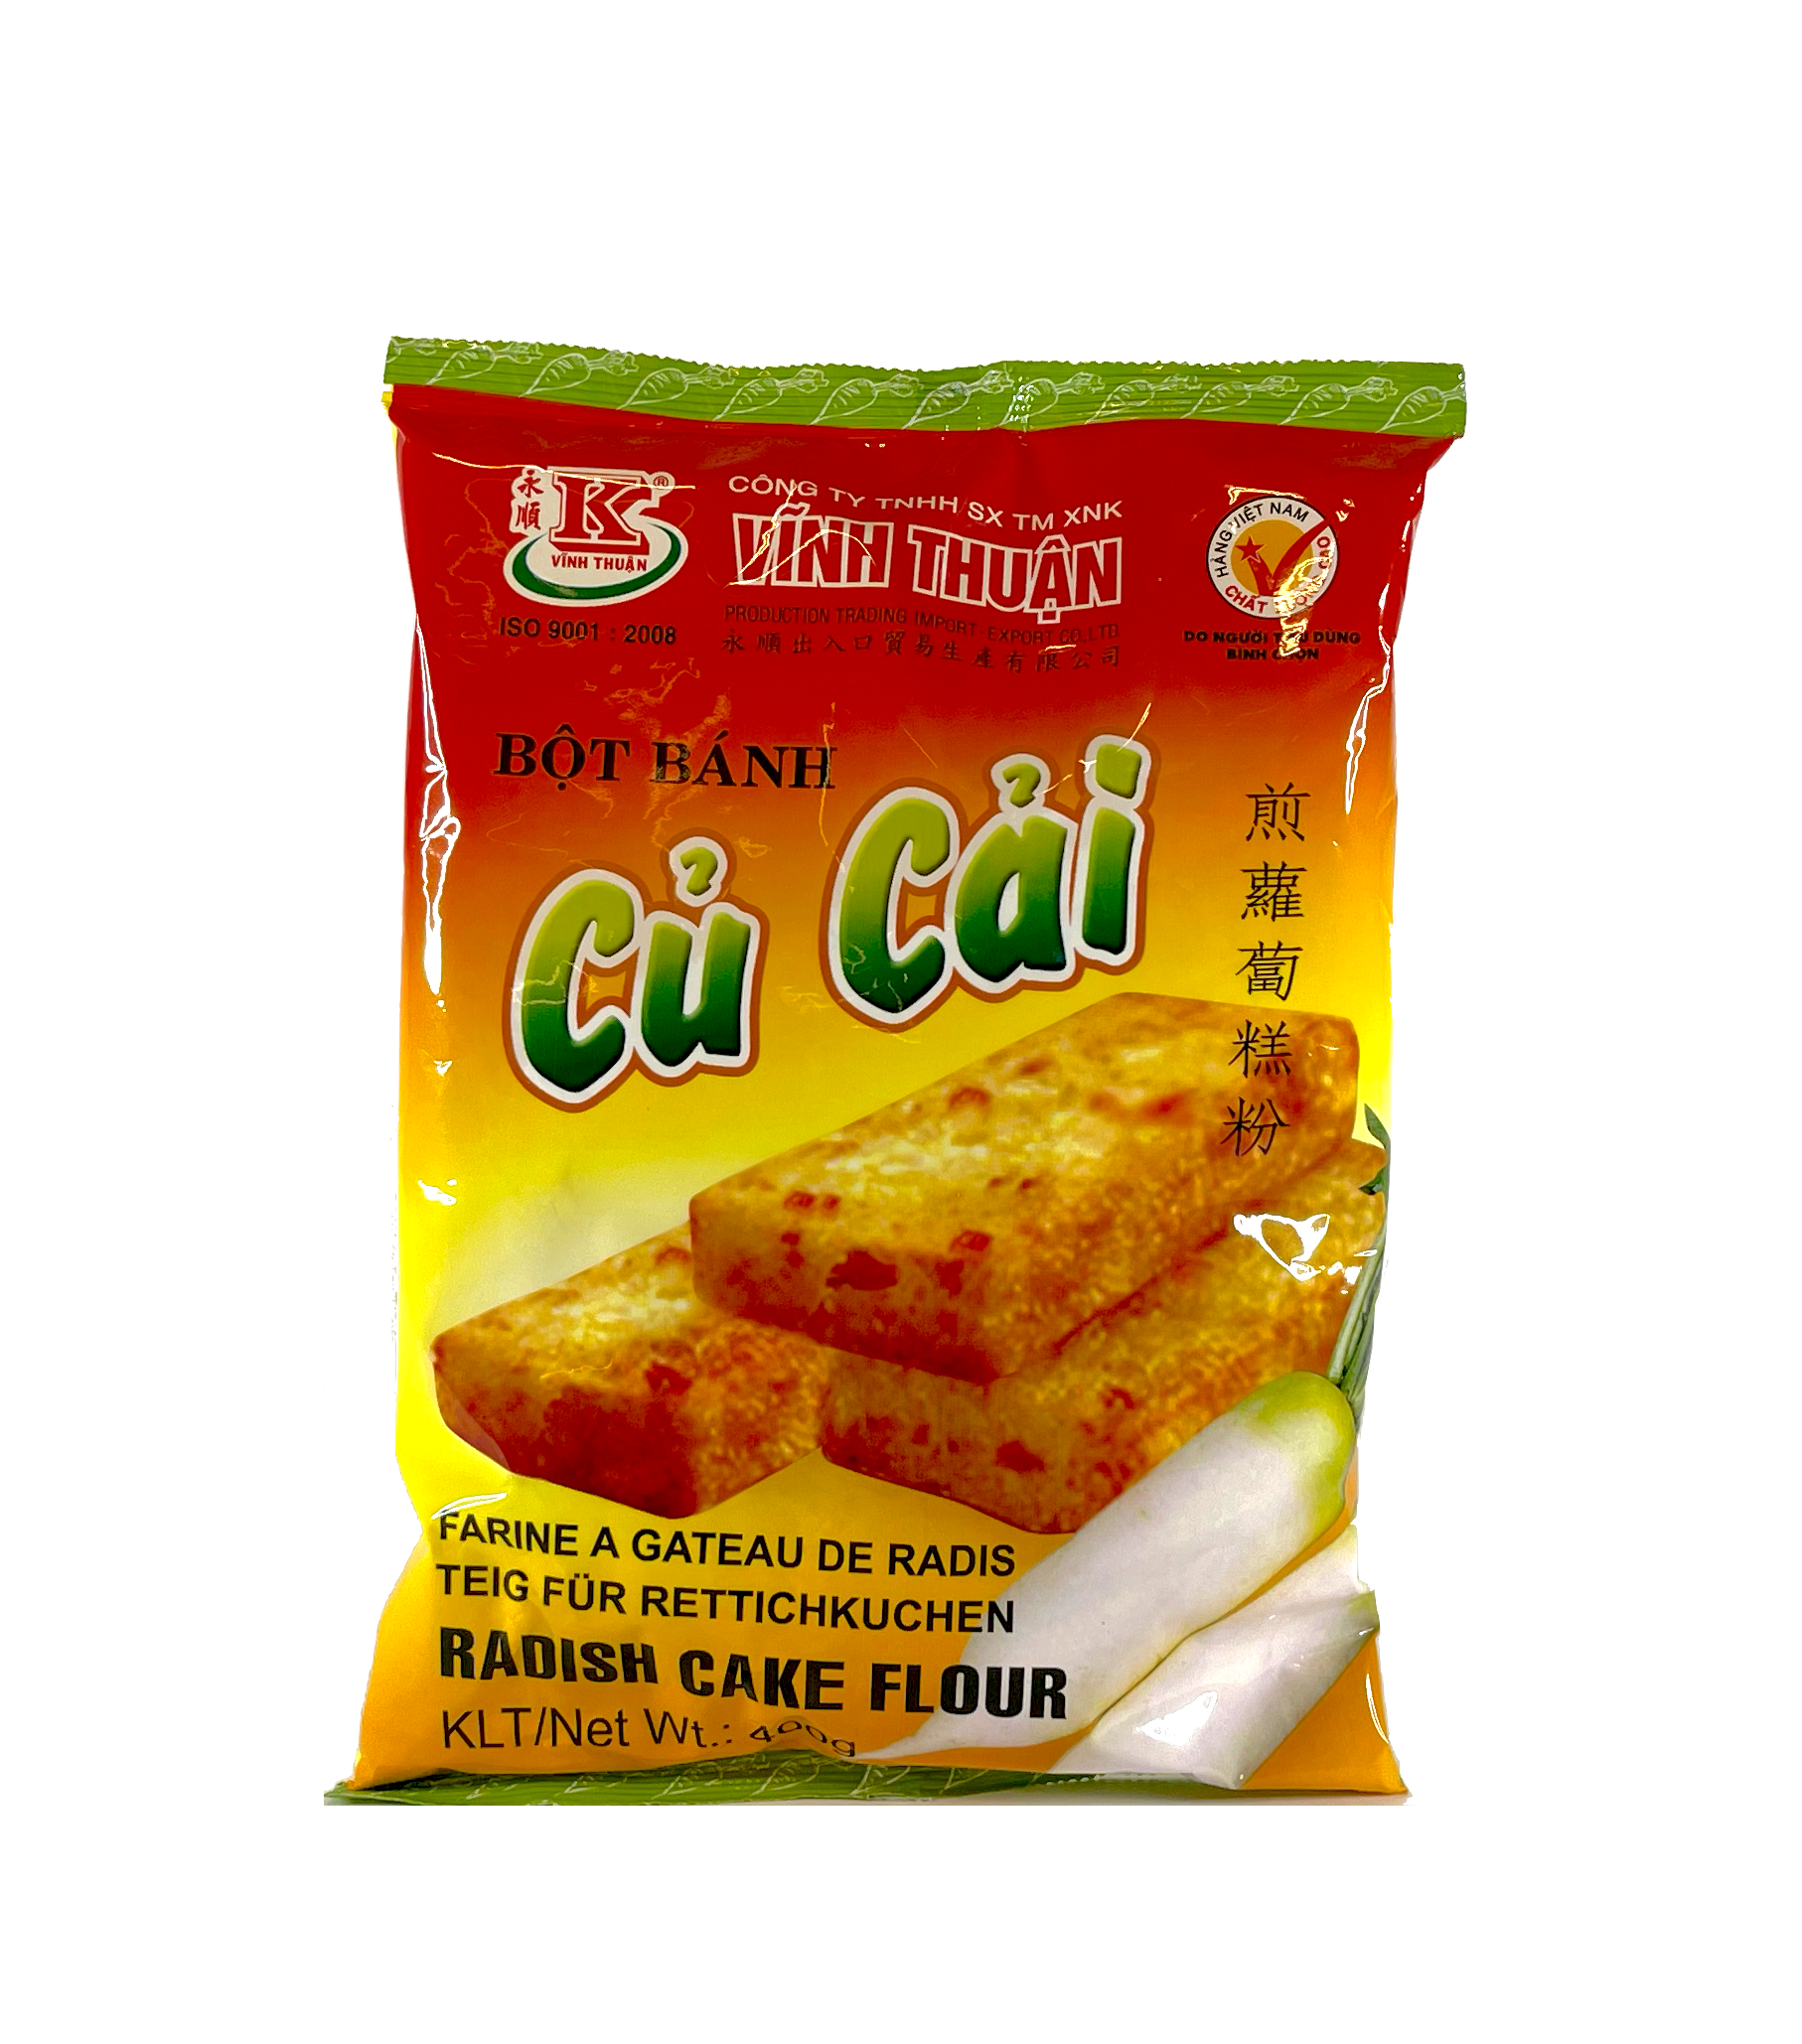 Flour for Bánh Cú Cái/Radish cake 400g - Vinh Thuan Vietnam